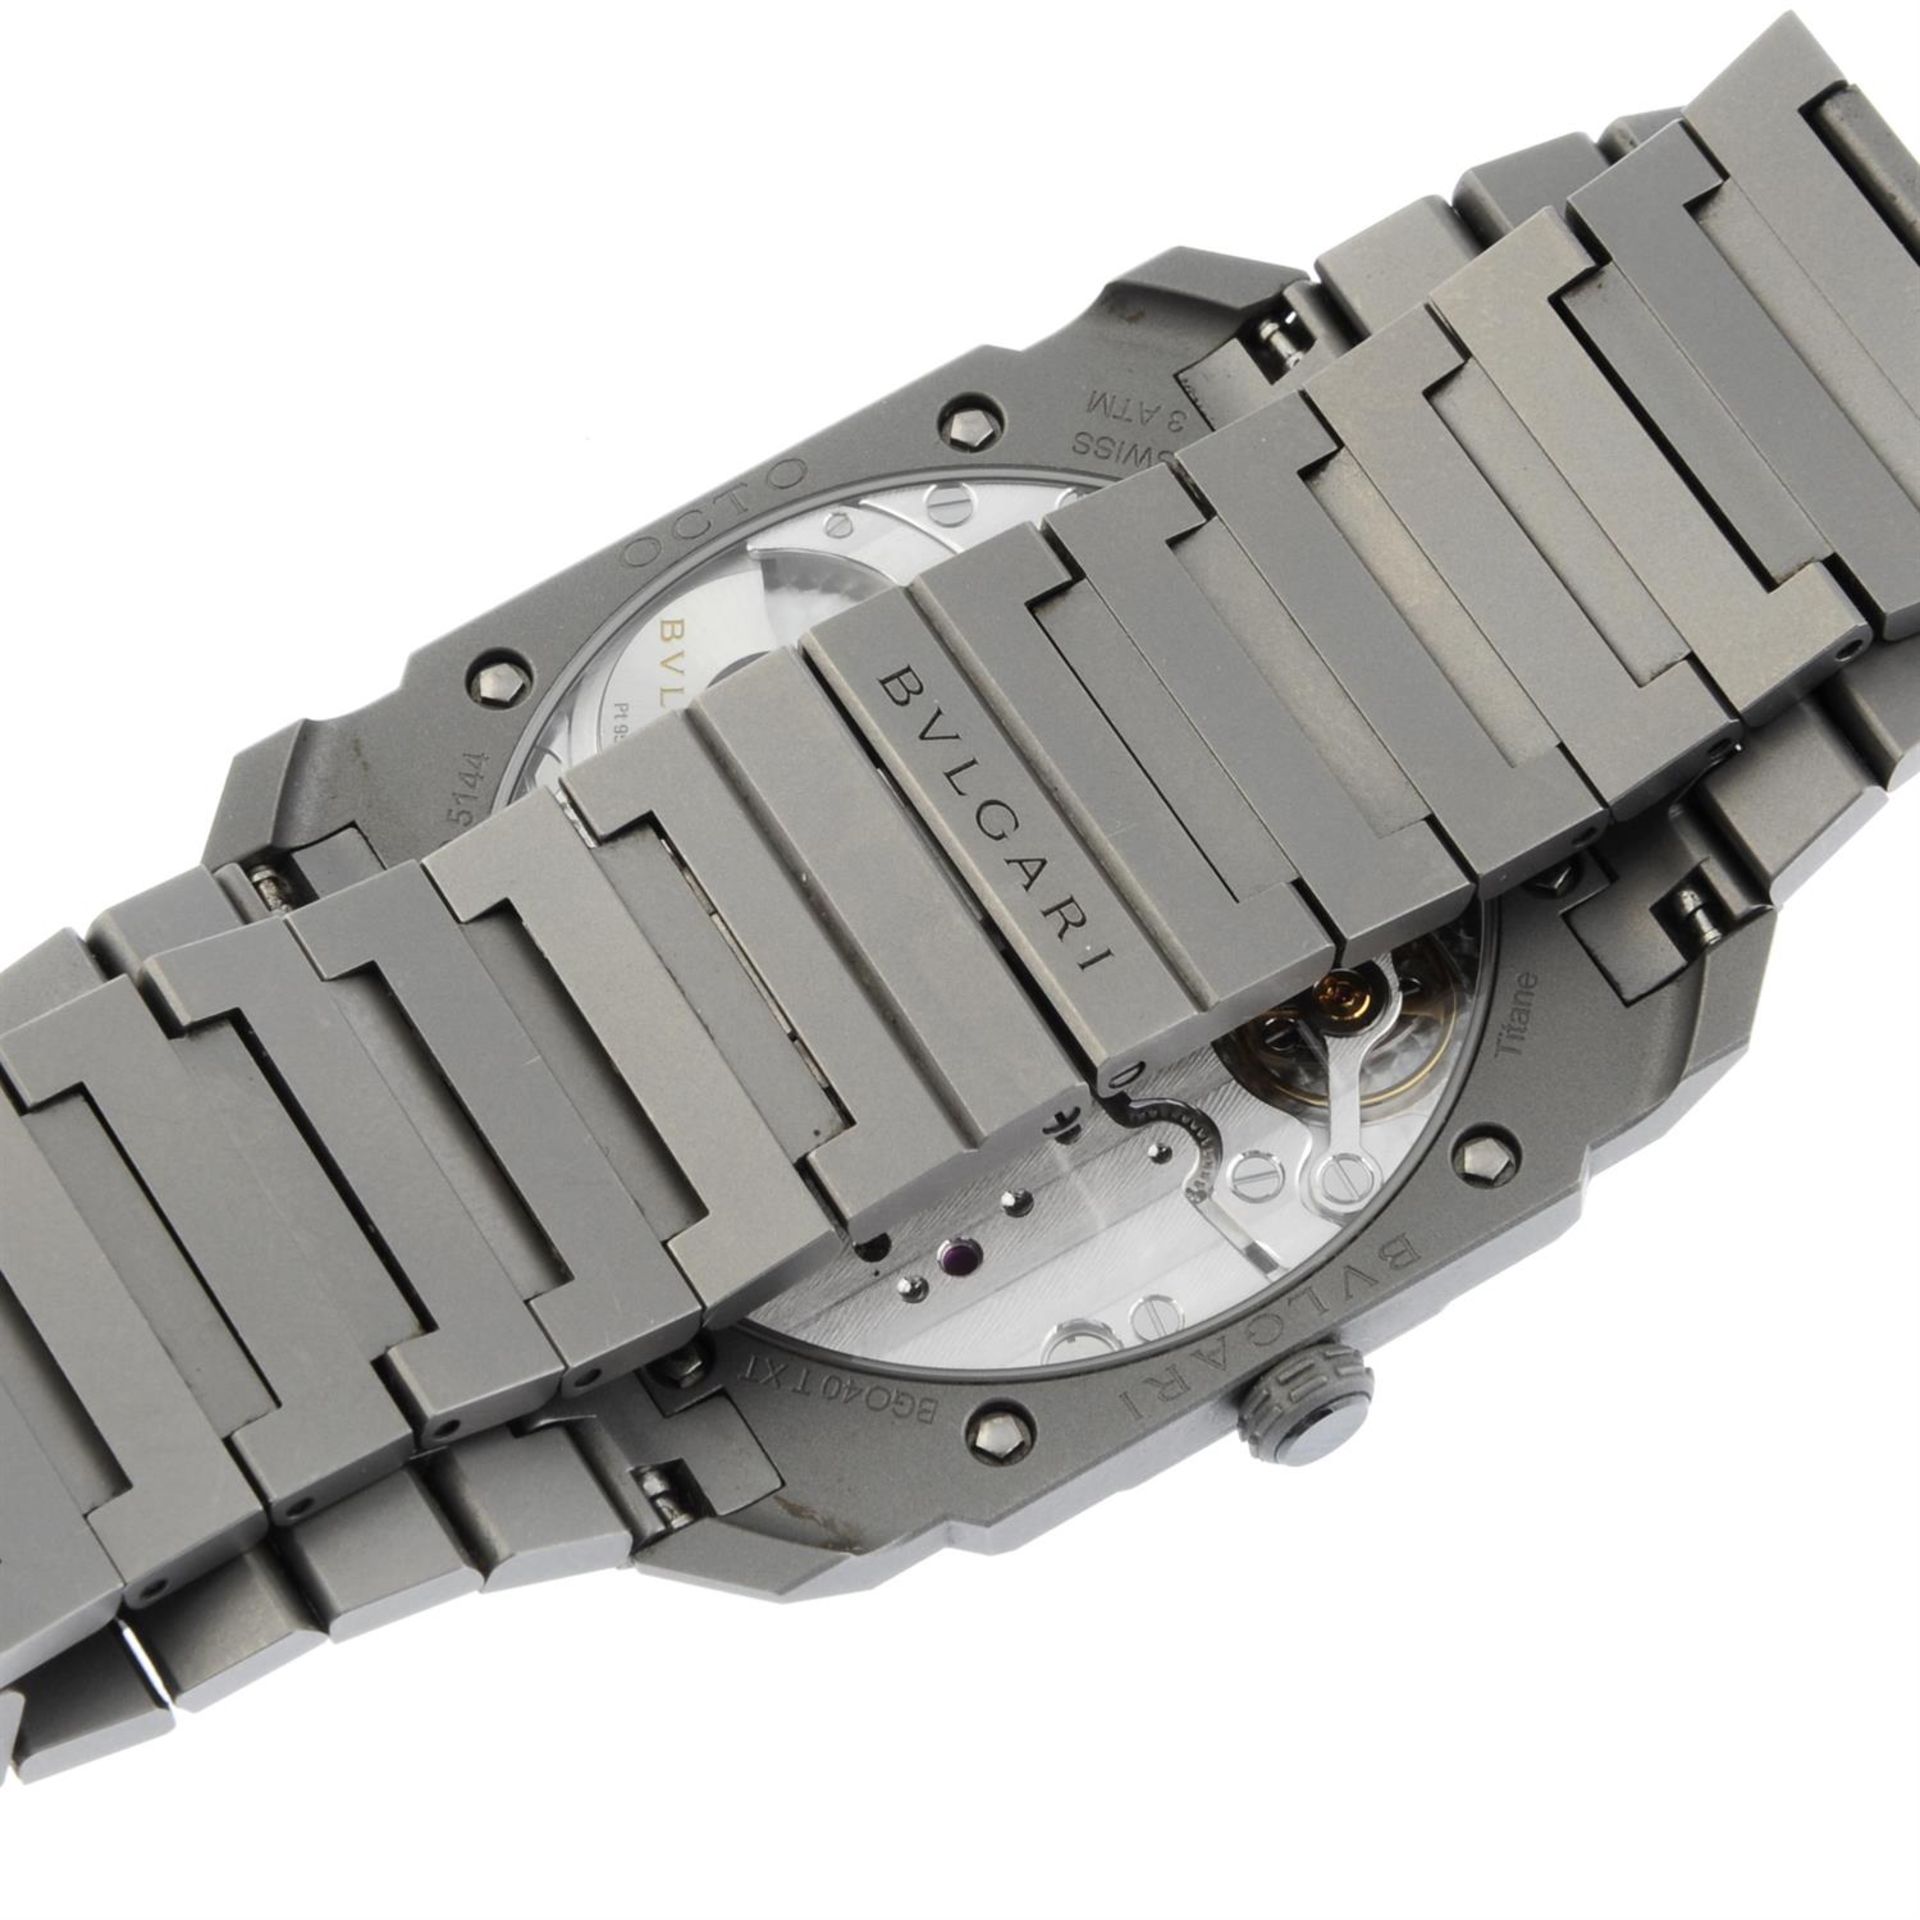 BULGARI - a titanium Octo Finissimo bracelet watch, 40mm. - Image 2 of 6